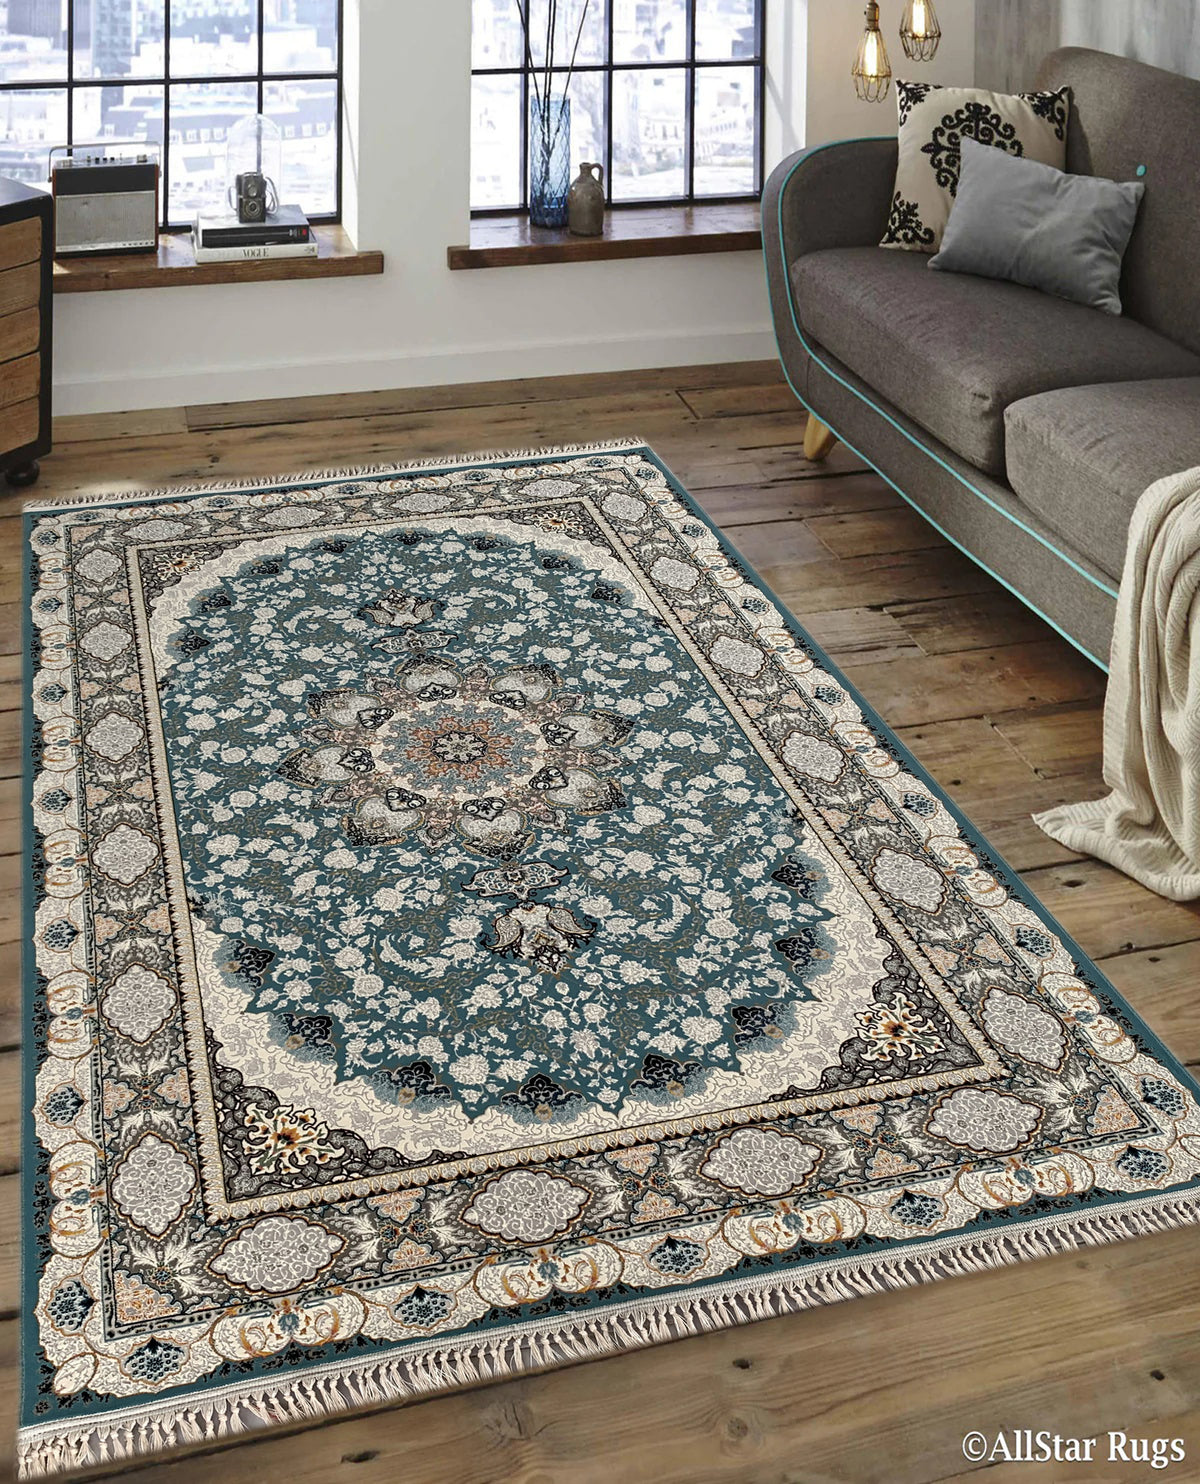 Rugslane Irani Turquoise Ground Black Border Tradition Design High Quality Super Premium Silk Carpet 5ft X 7.6ft